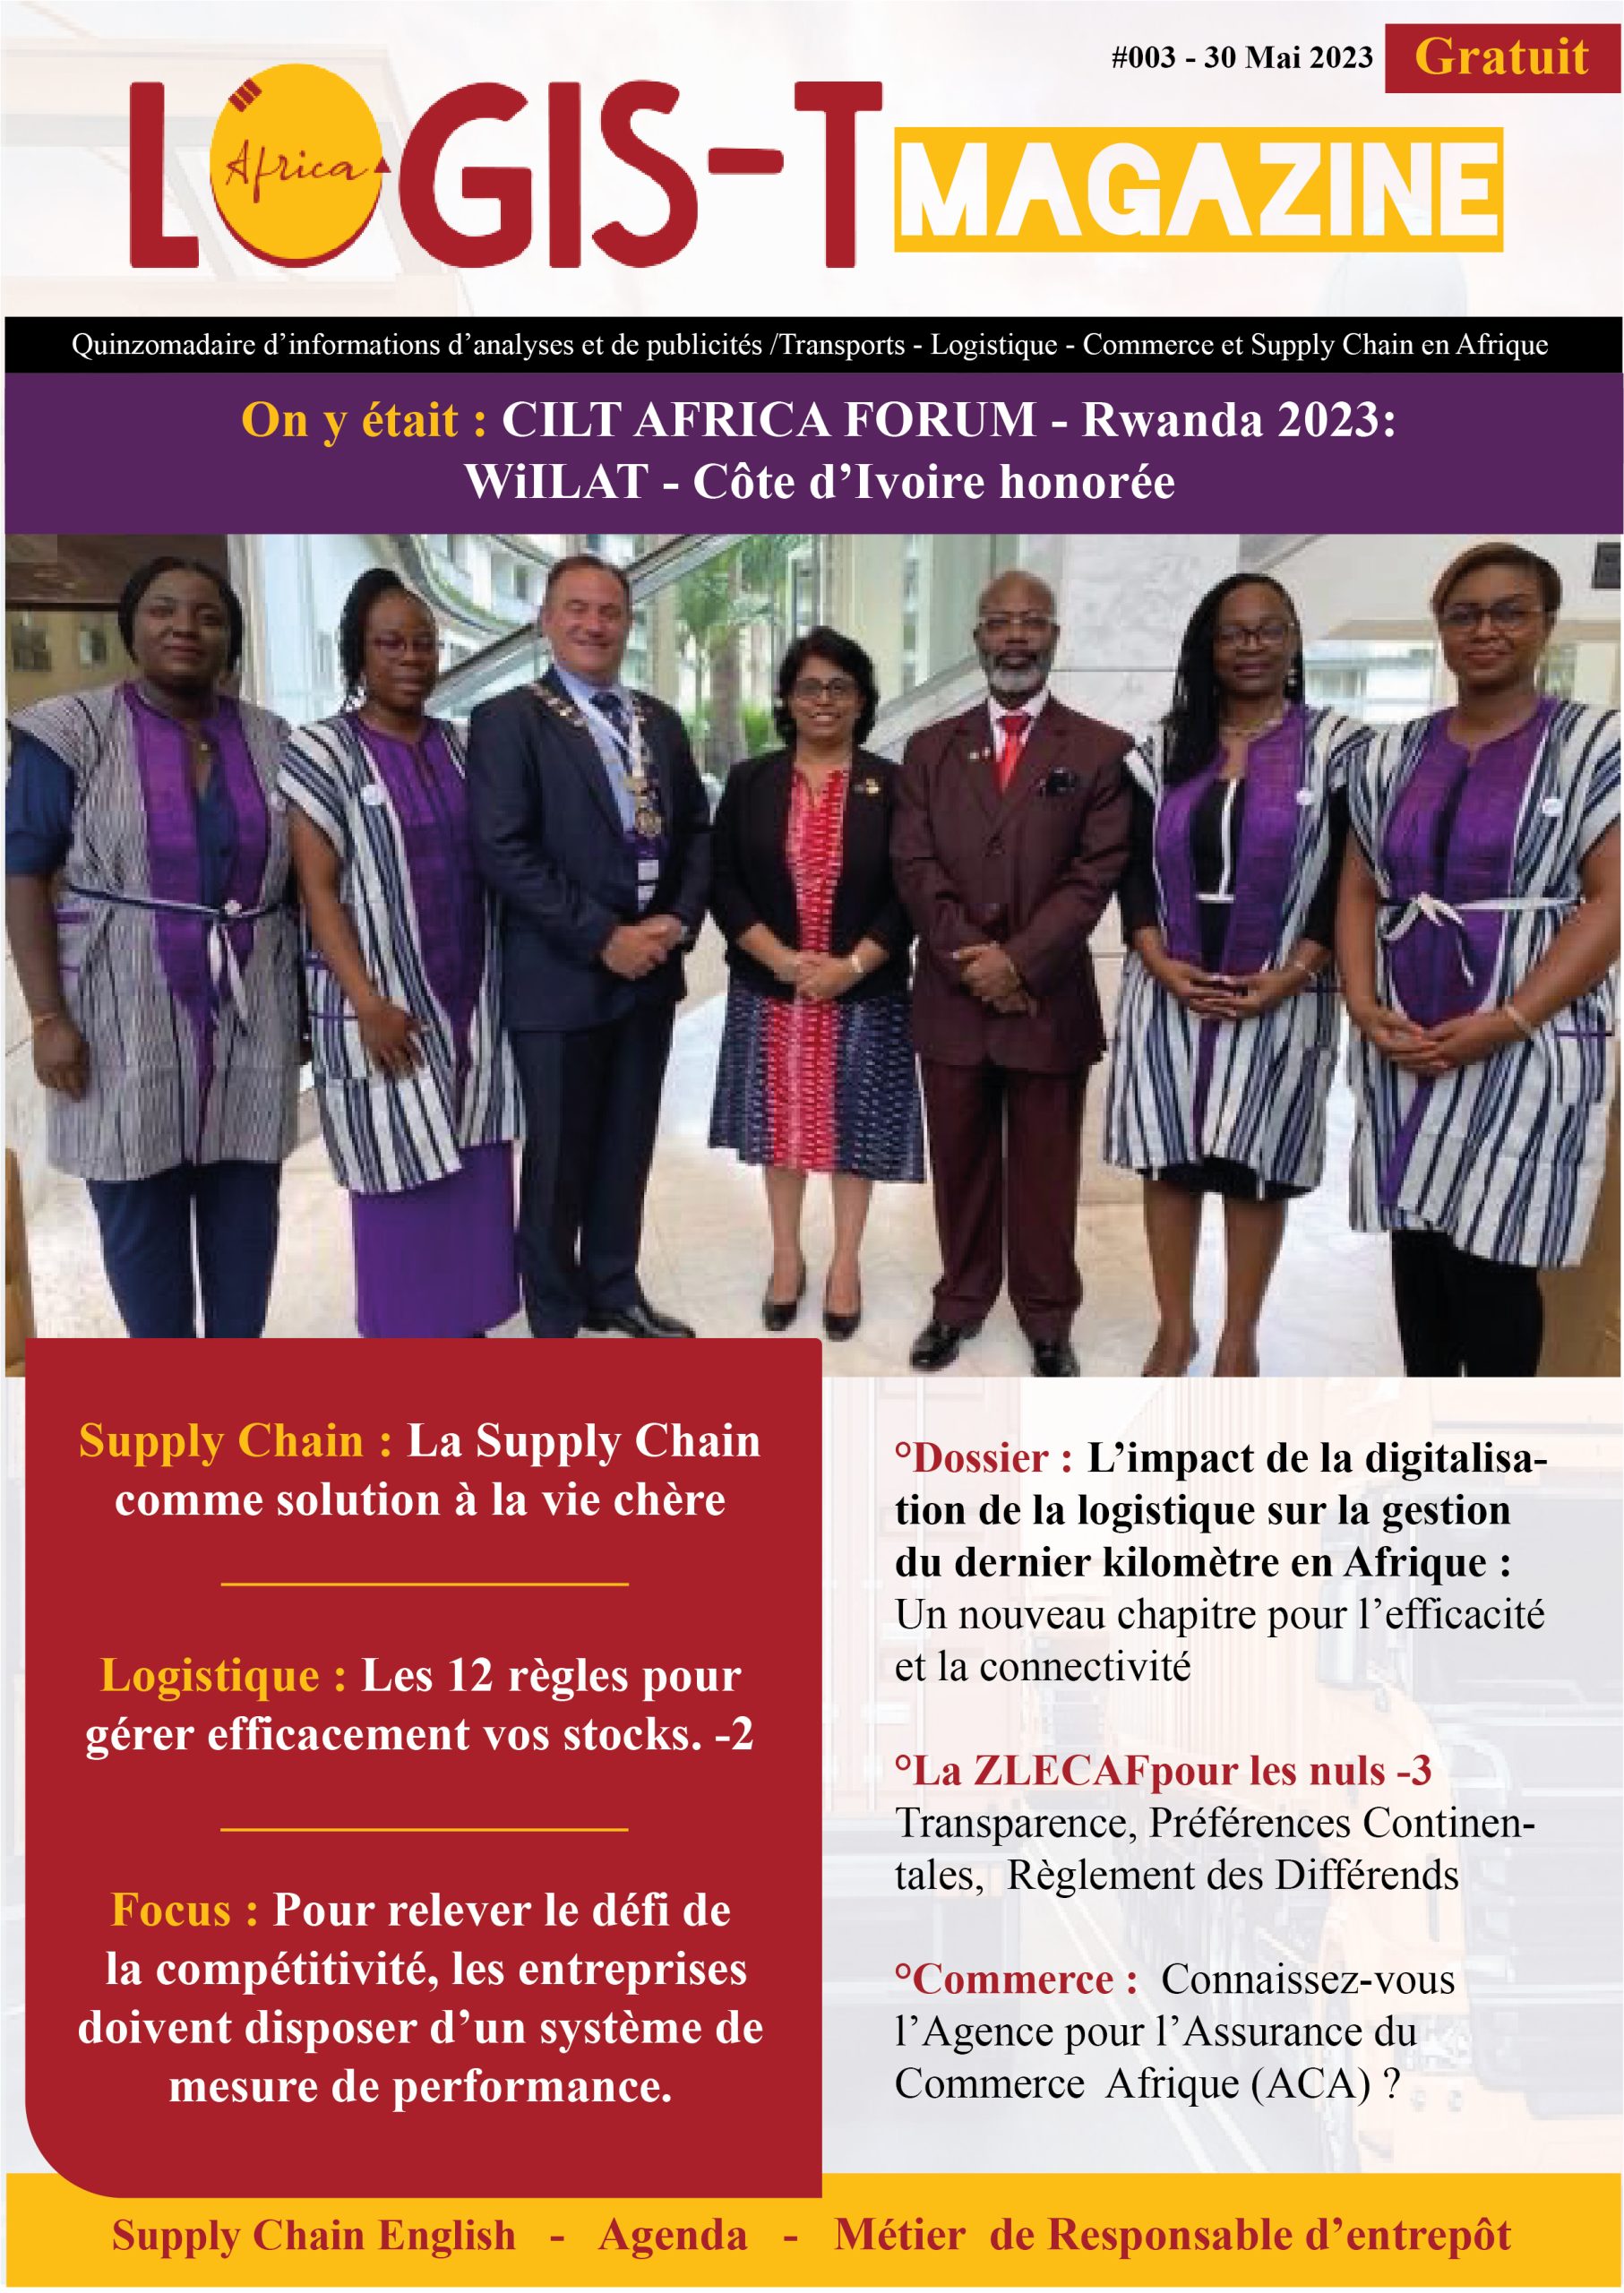 LogisT Africa Magazine -003